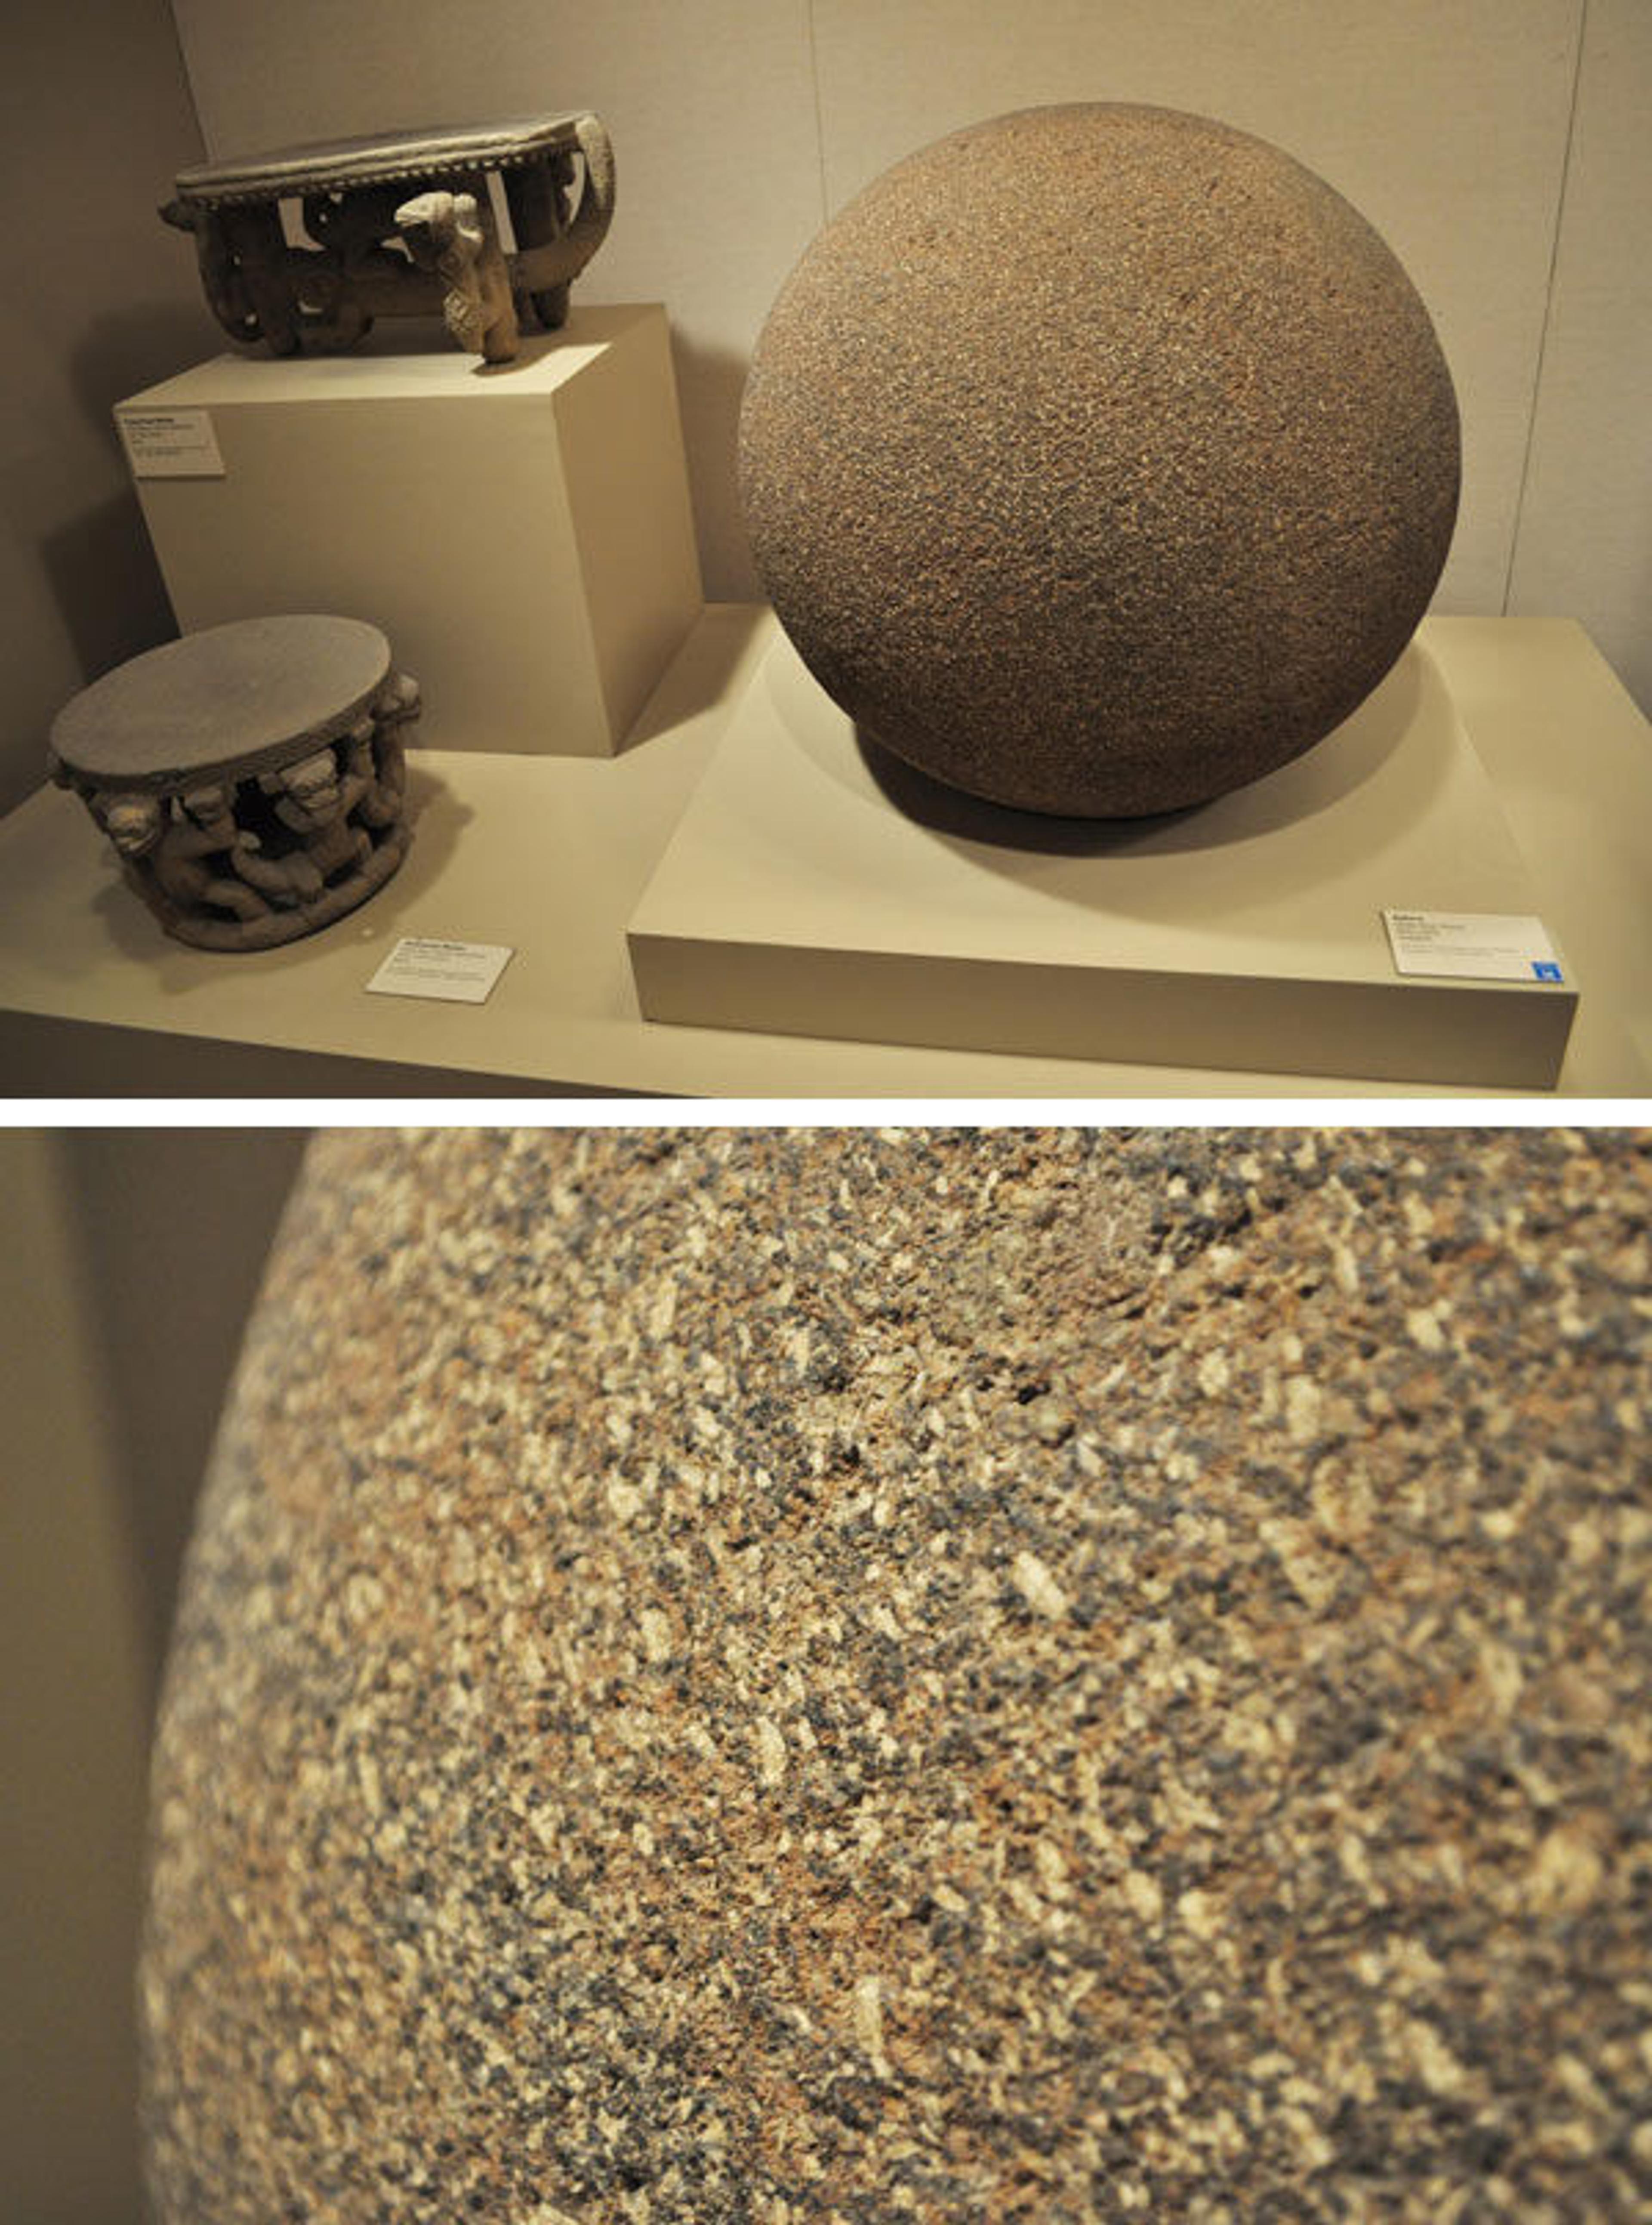 Sphere. Costa Rica, Diquís, 800–1550. Andesite; Diam. 26 in. (66.04 cm). The Metropolitan Museum of Art, New York, Gift of the Austen-Stokes Ancient Americas Foundation, 2012 (2012.530.3)